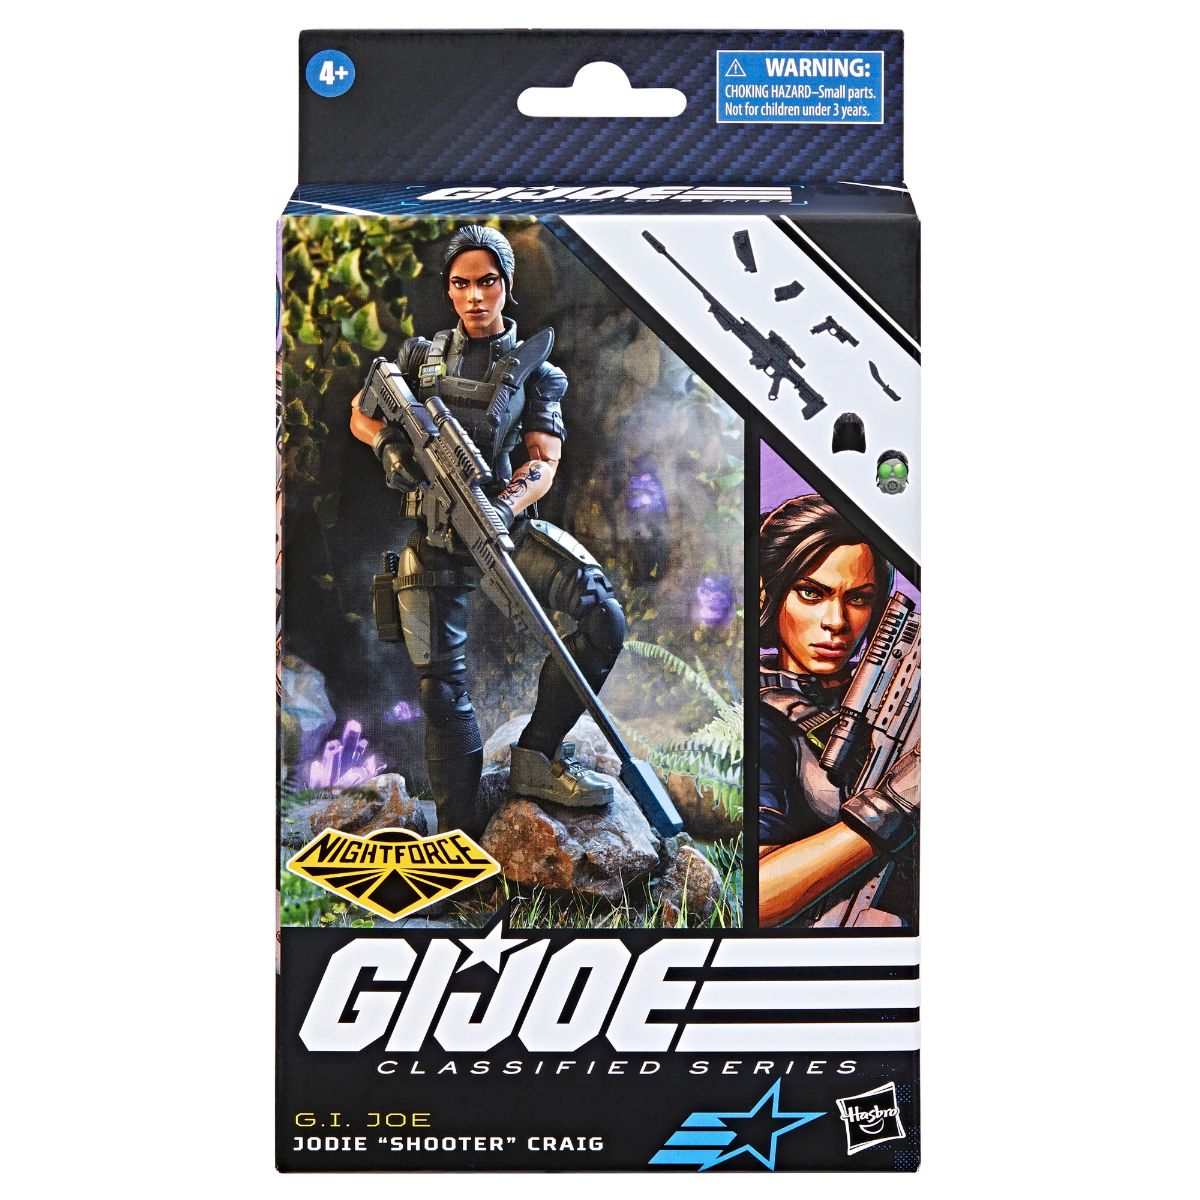 G.I. Joe Classified Series Nightforce Jodie "Shooter" Craig(90) 6-Inch Action Figure画像